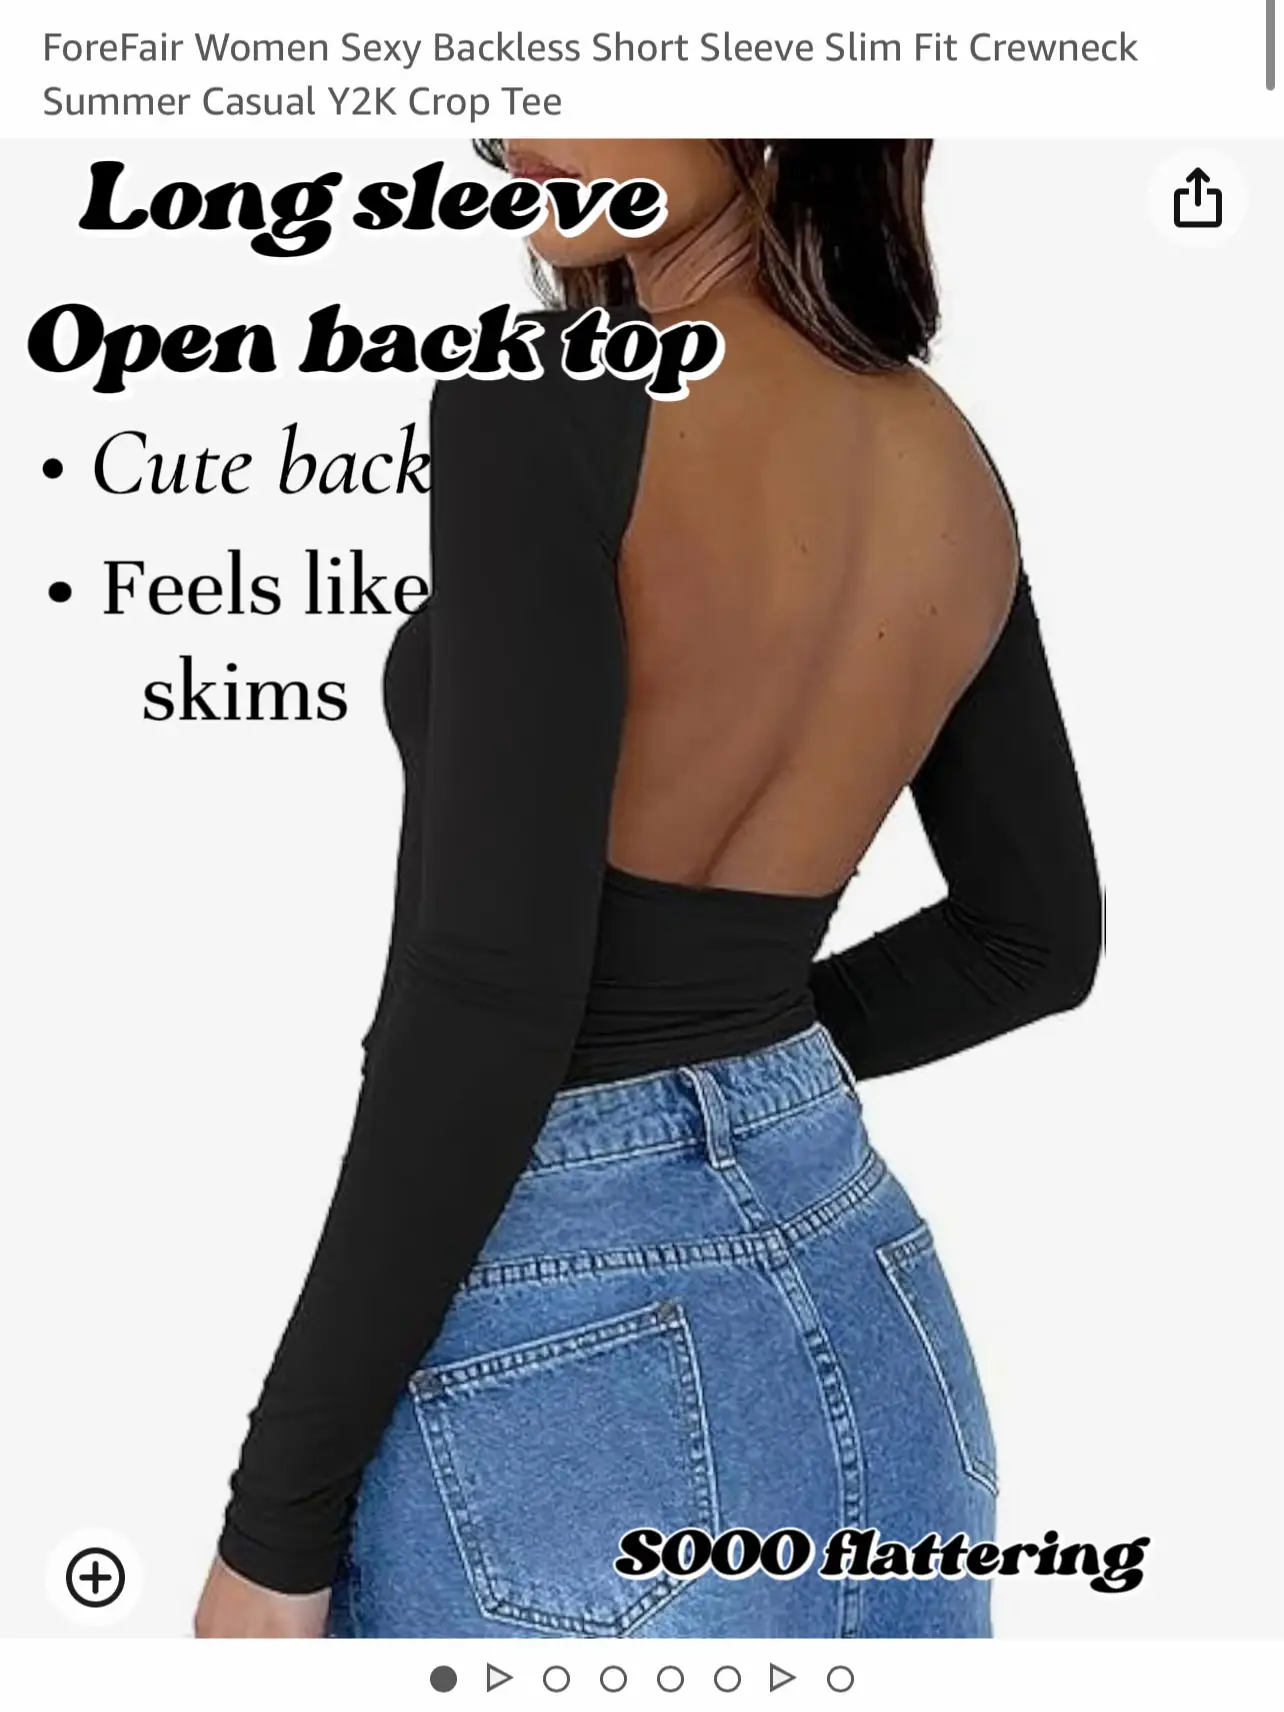 ForeFair Women Sexy Backless Short Sleeve Slim Fit Crewneck Summer